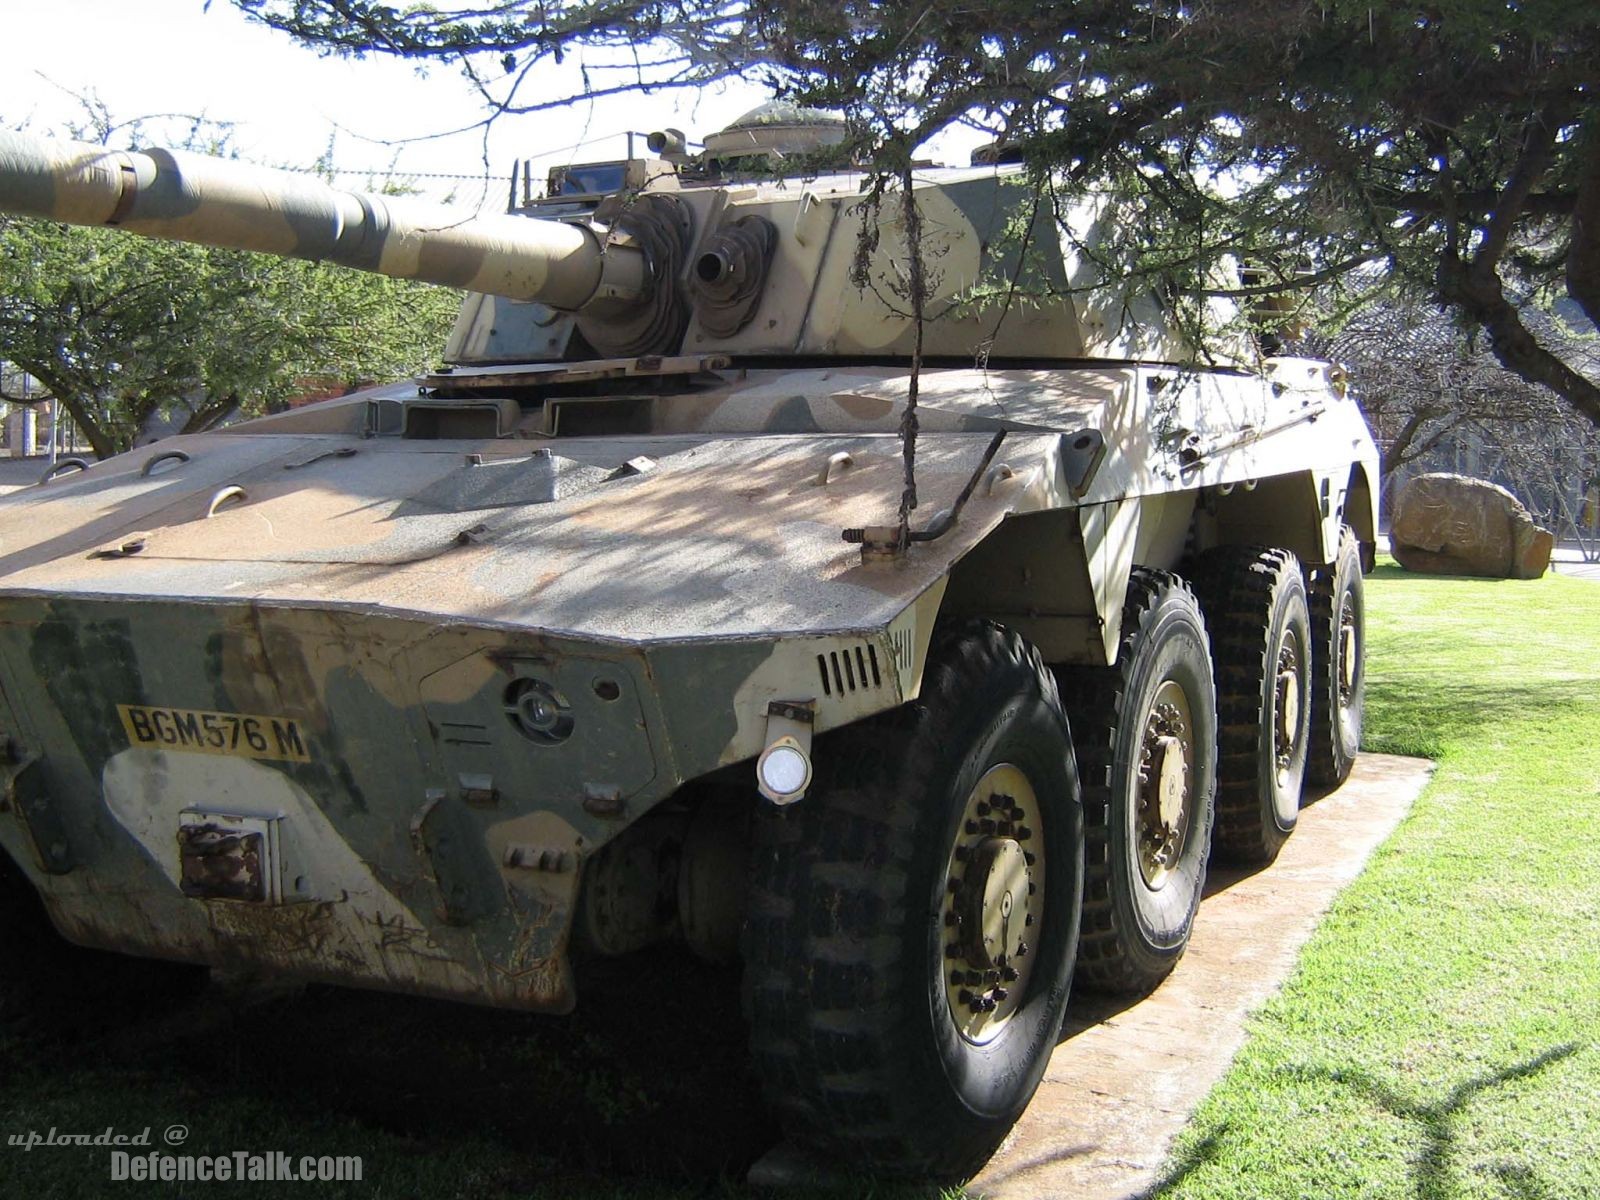 Rooikat 76 wheeled armoured fighting vehicle